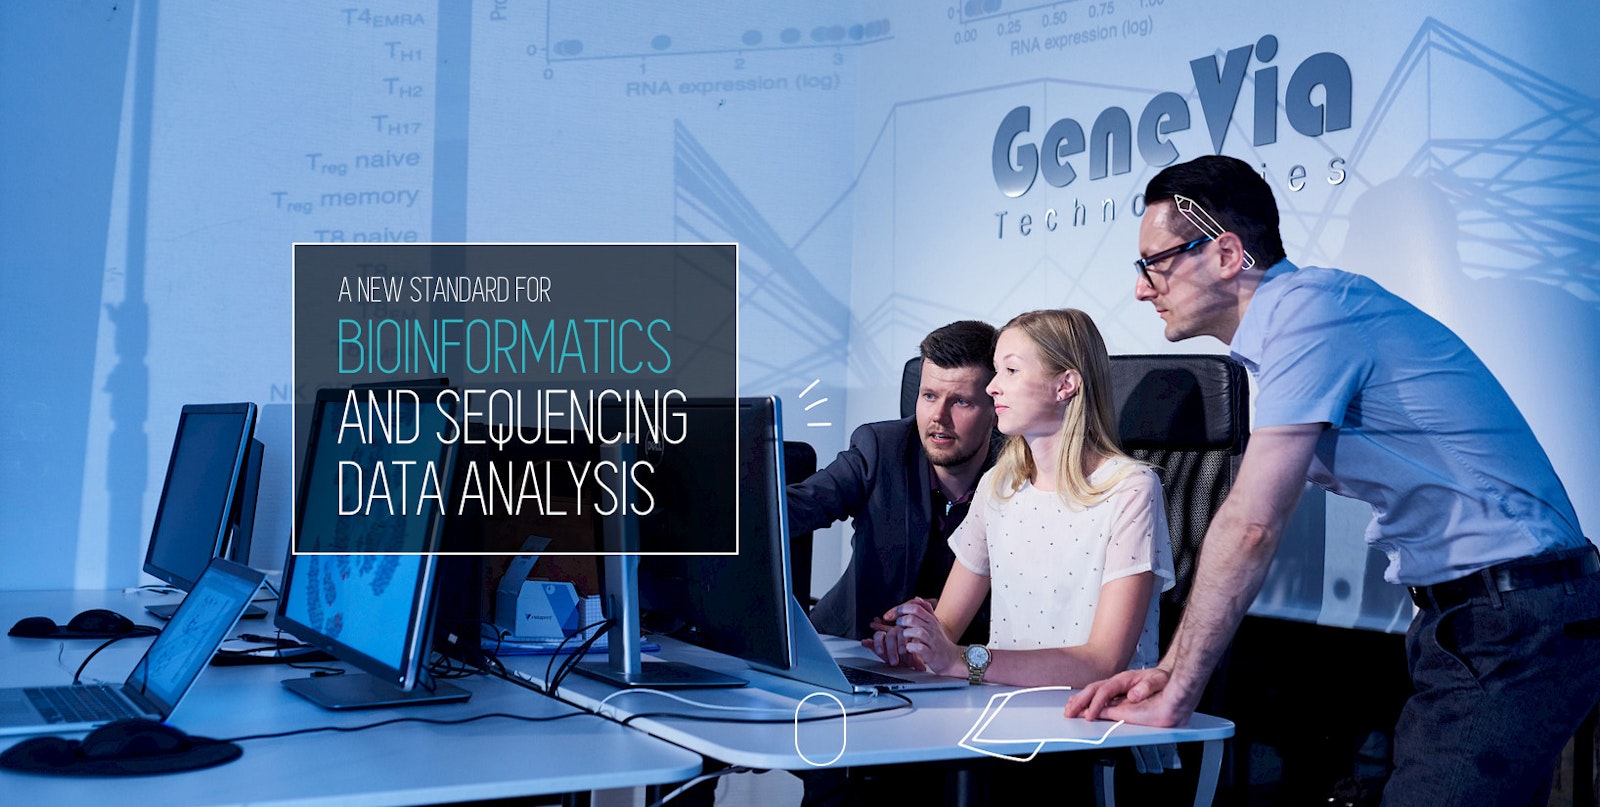 Bioinformatic analyses - Genevia Technologies